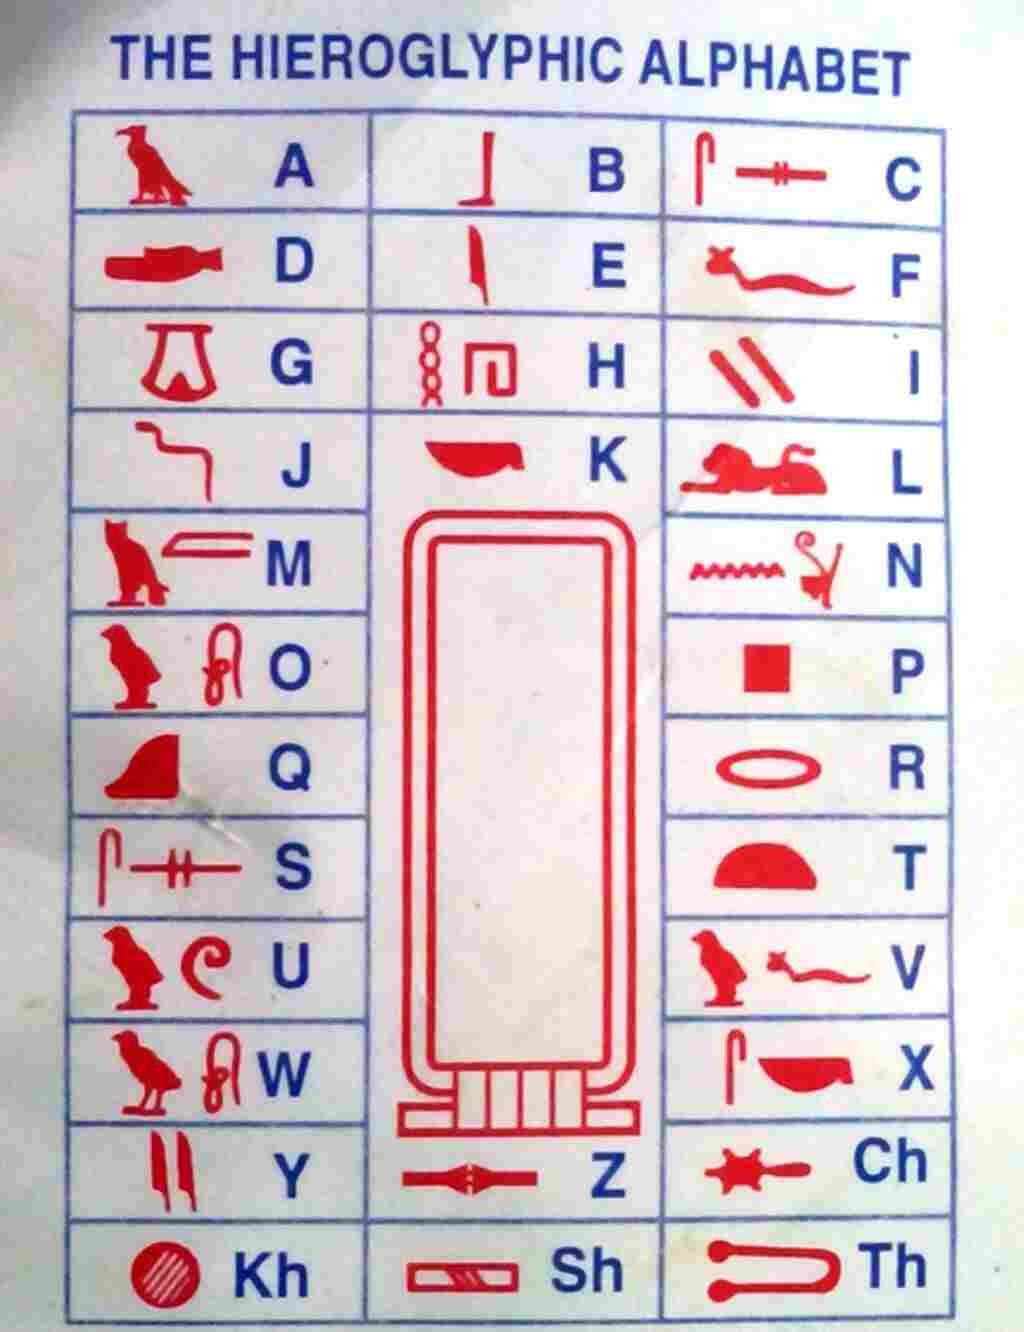 Alfabet hieroglif mesir